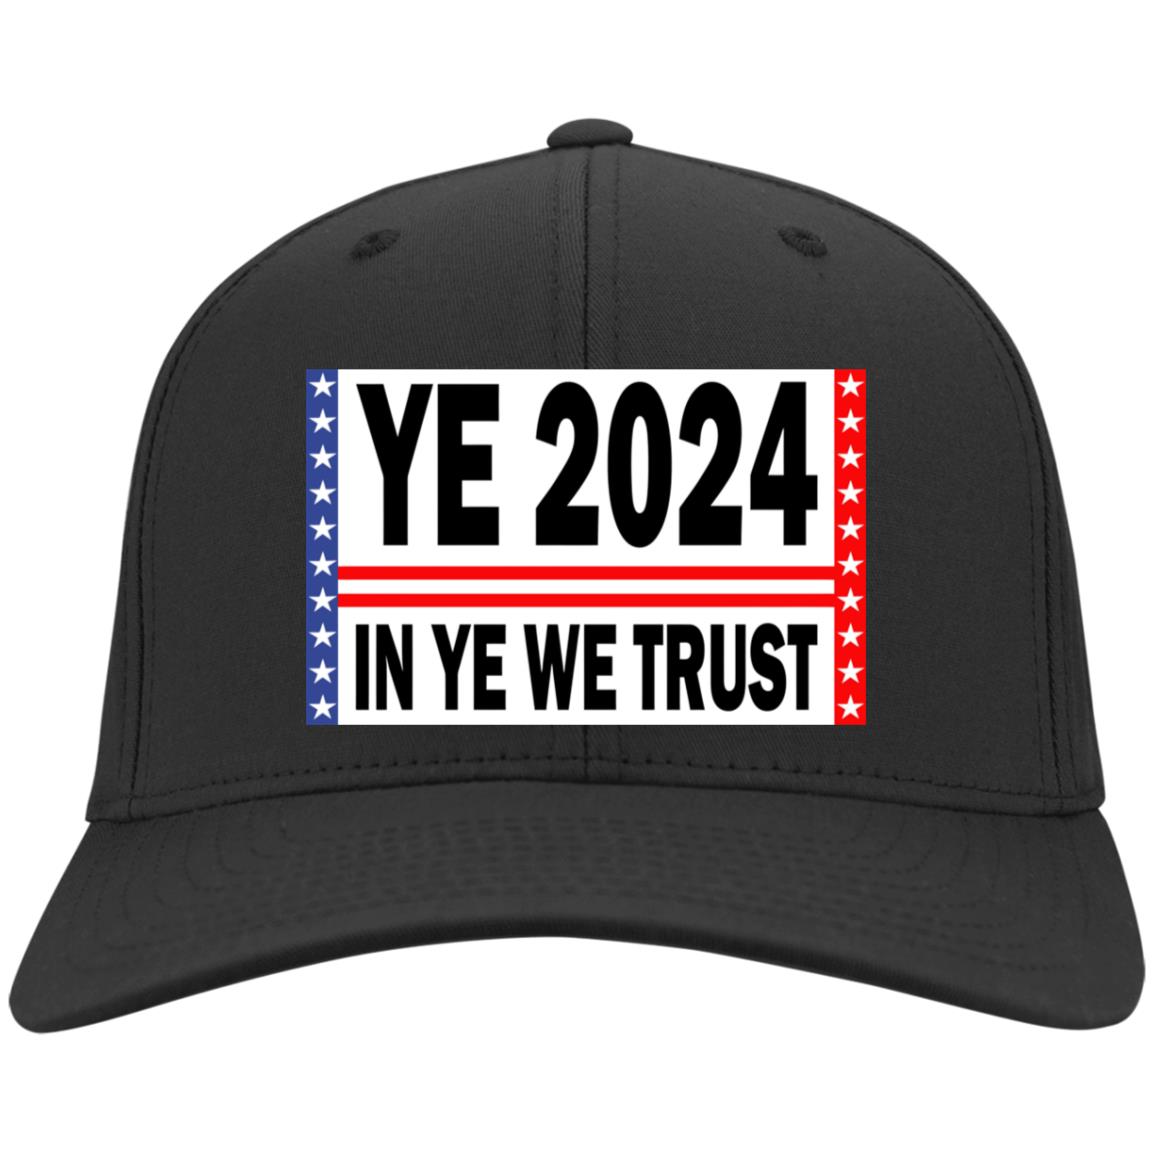 Ye 2024 in ye we trust hat cap 1